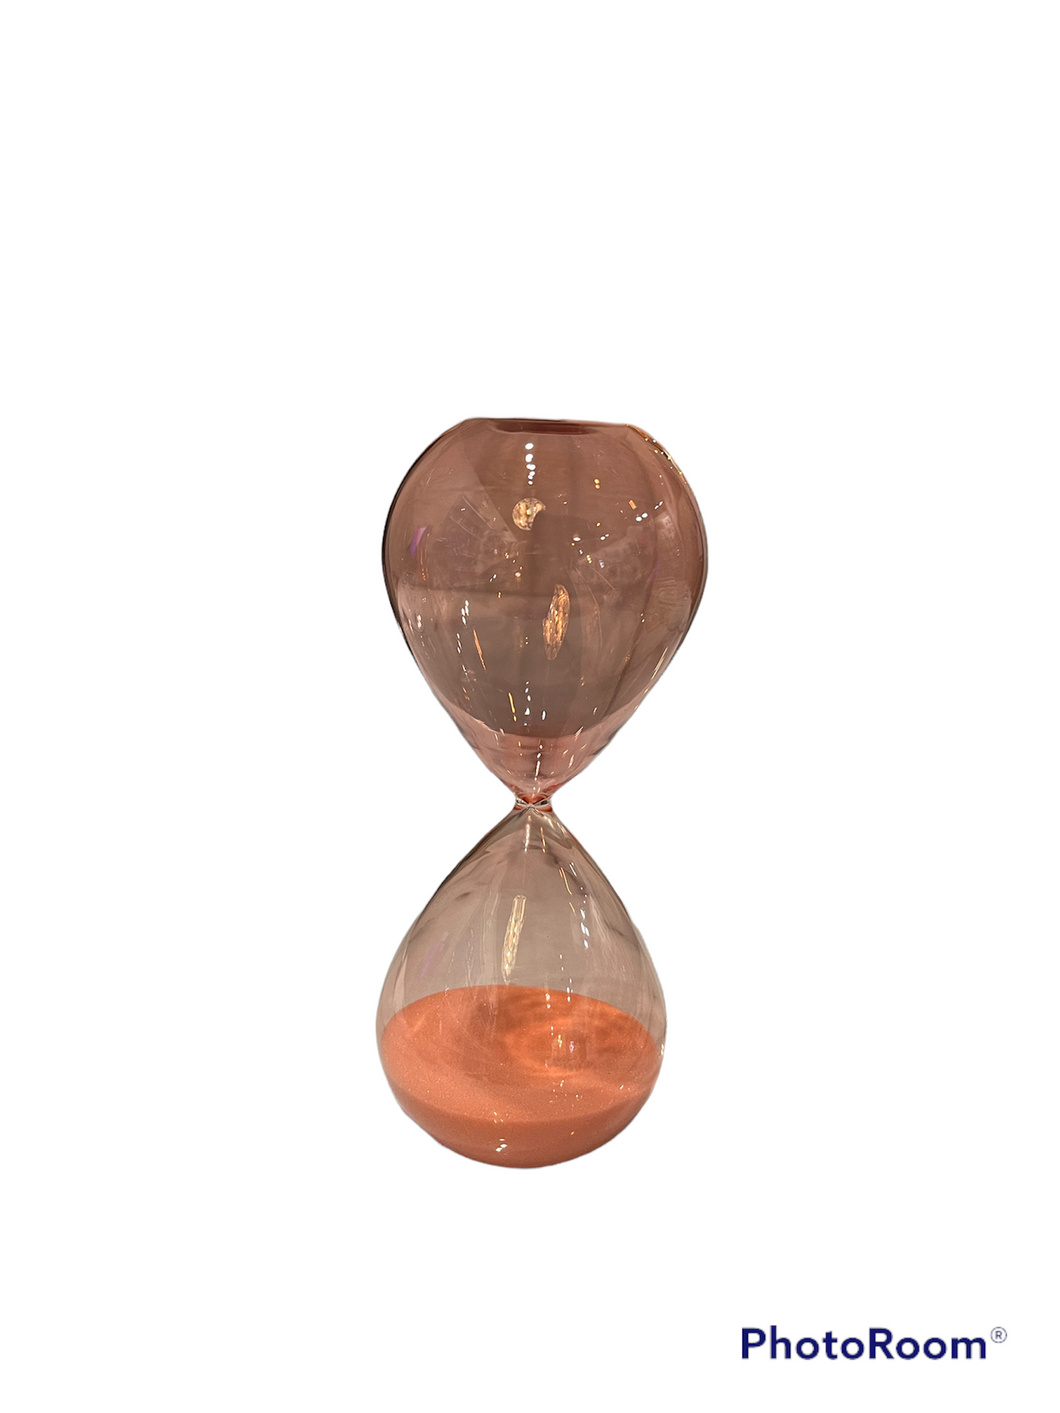 Hourglass - 30 minutes